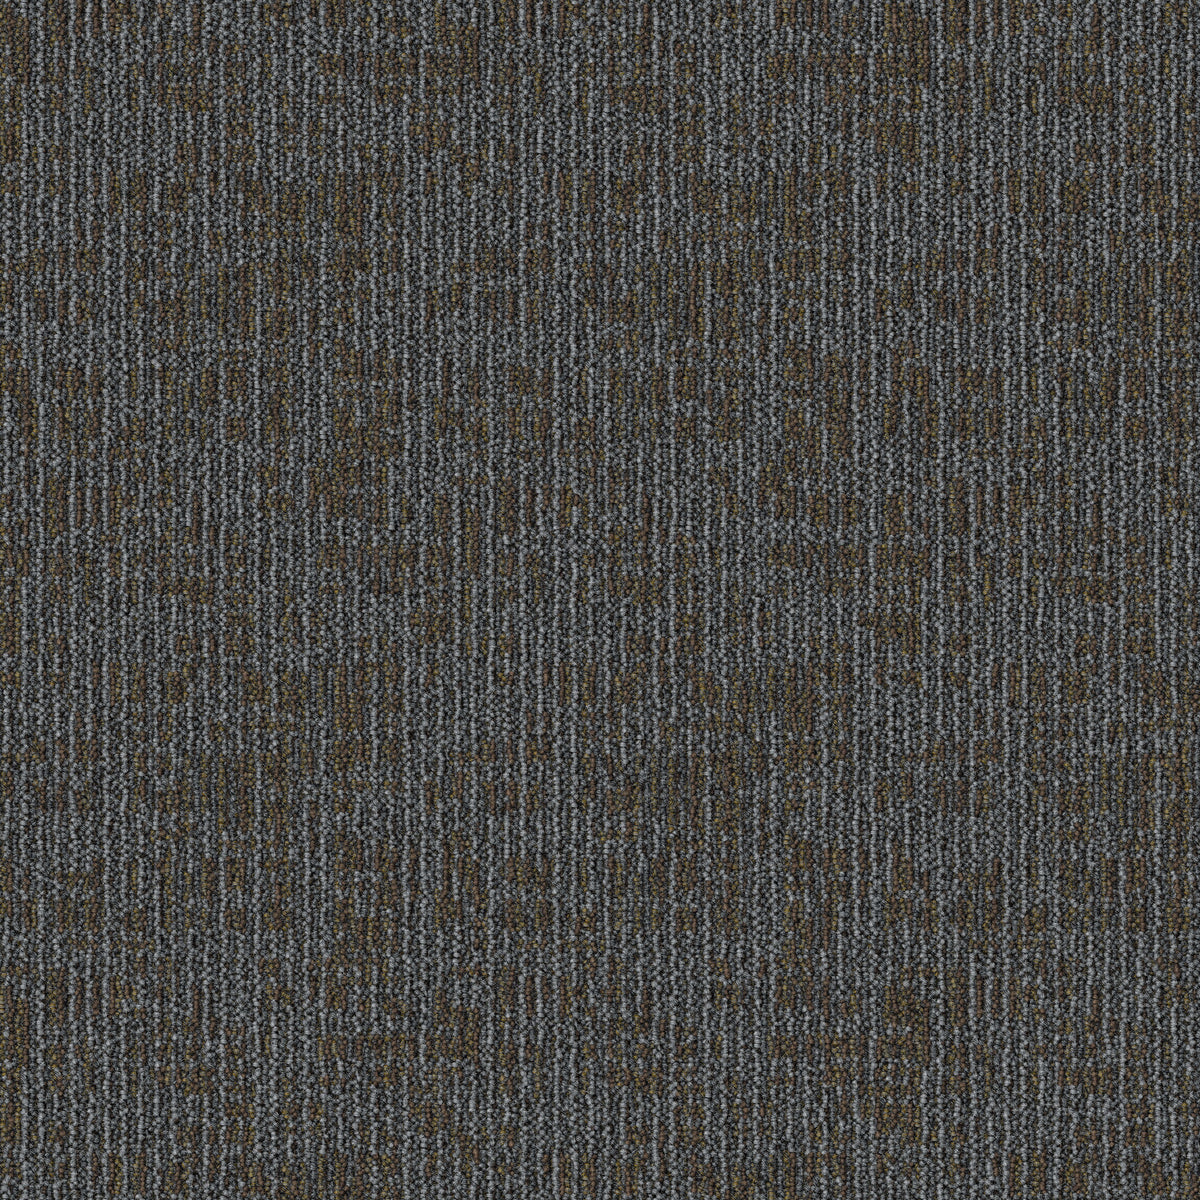 Mohawk Group - Sketch Effect - Shaded Lines - Carpet Tile - Brown Oak